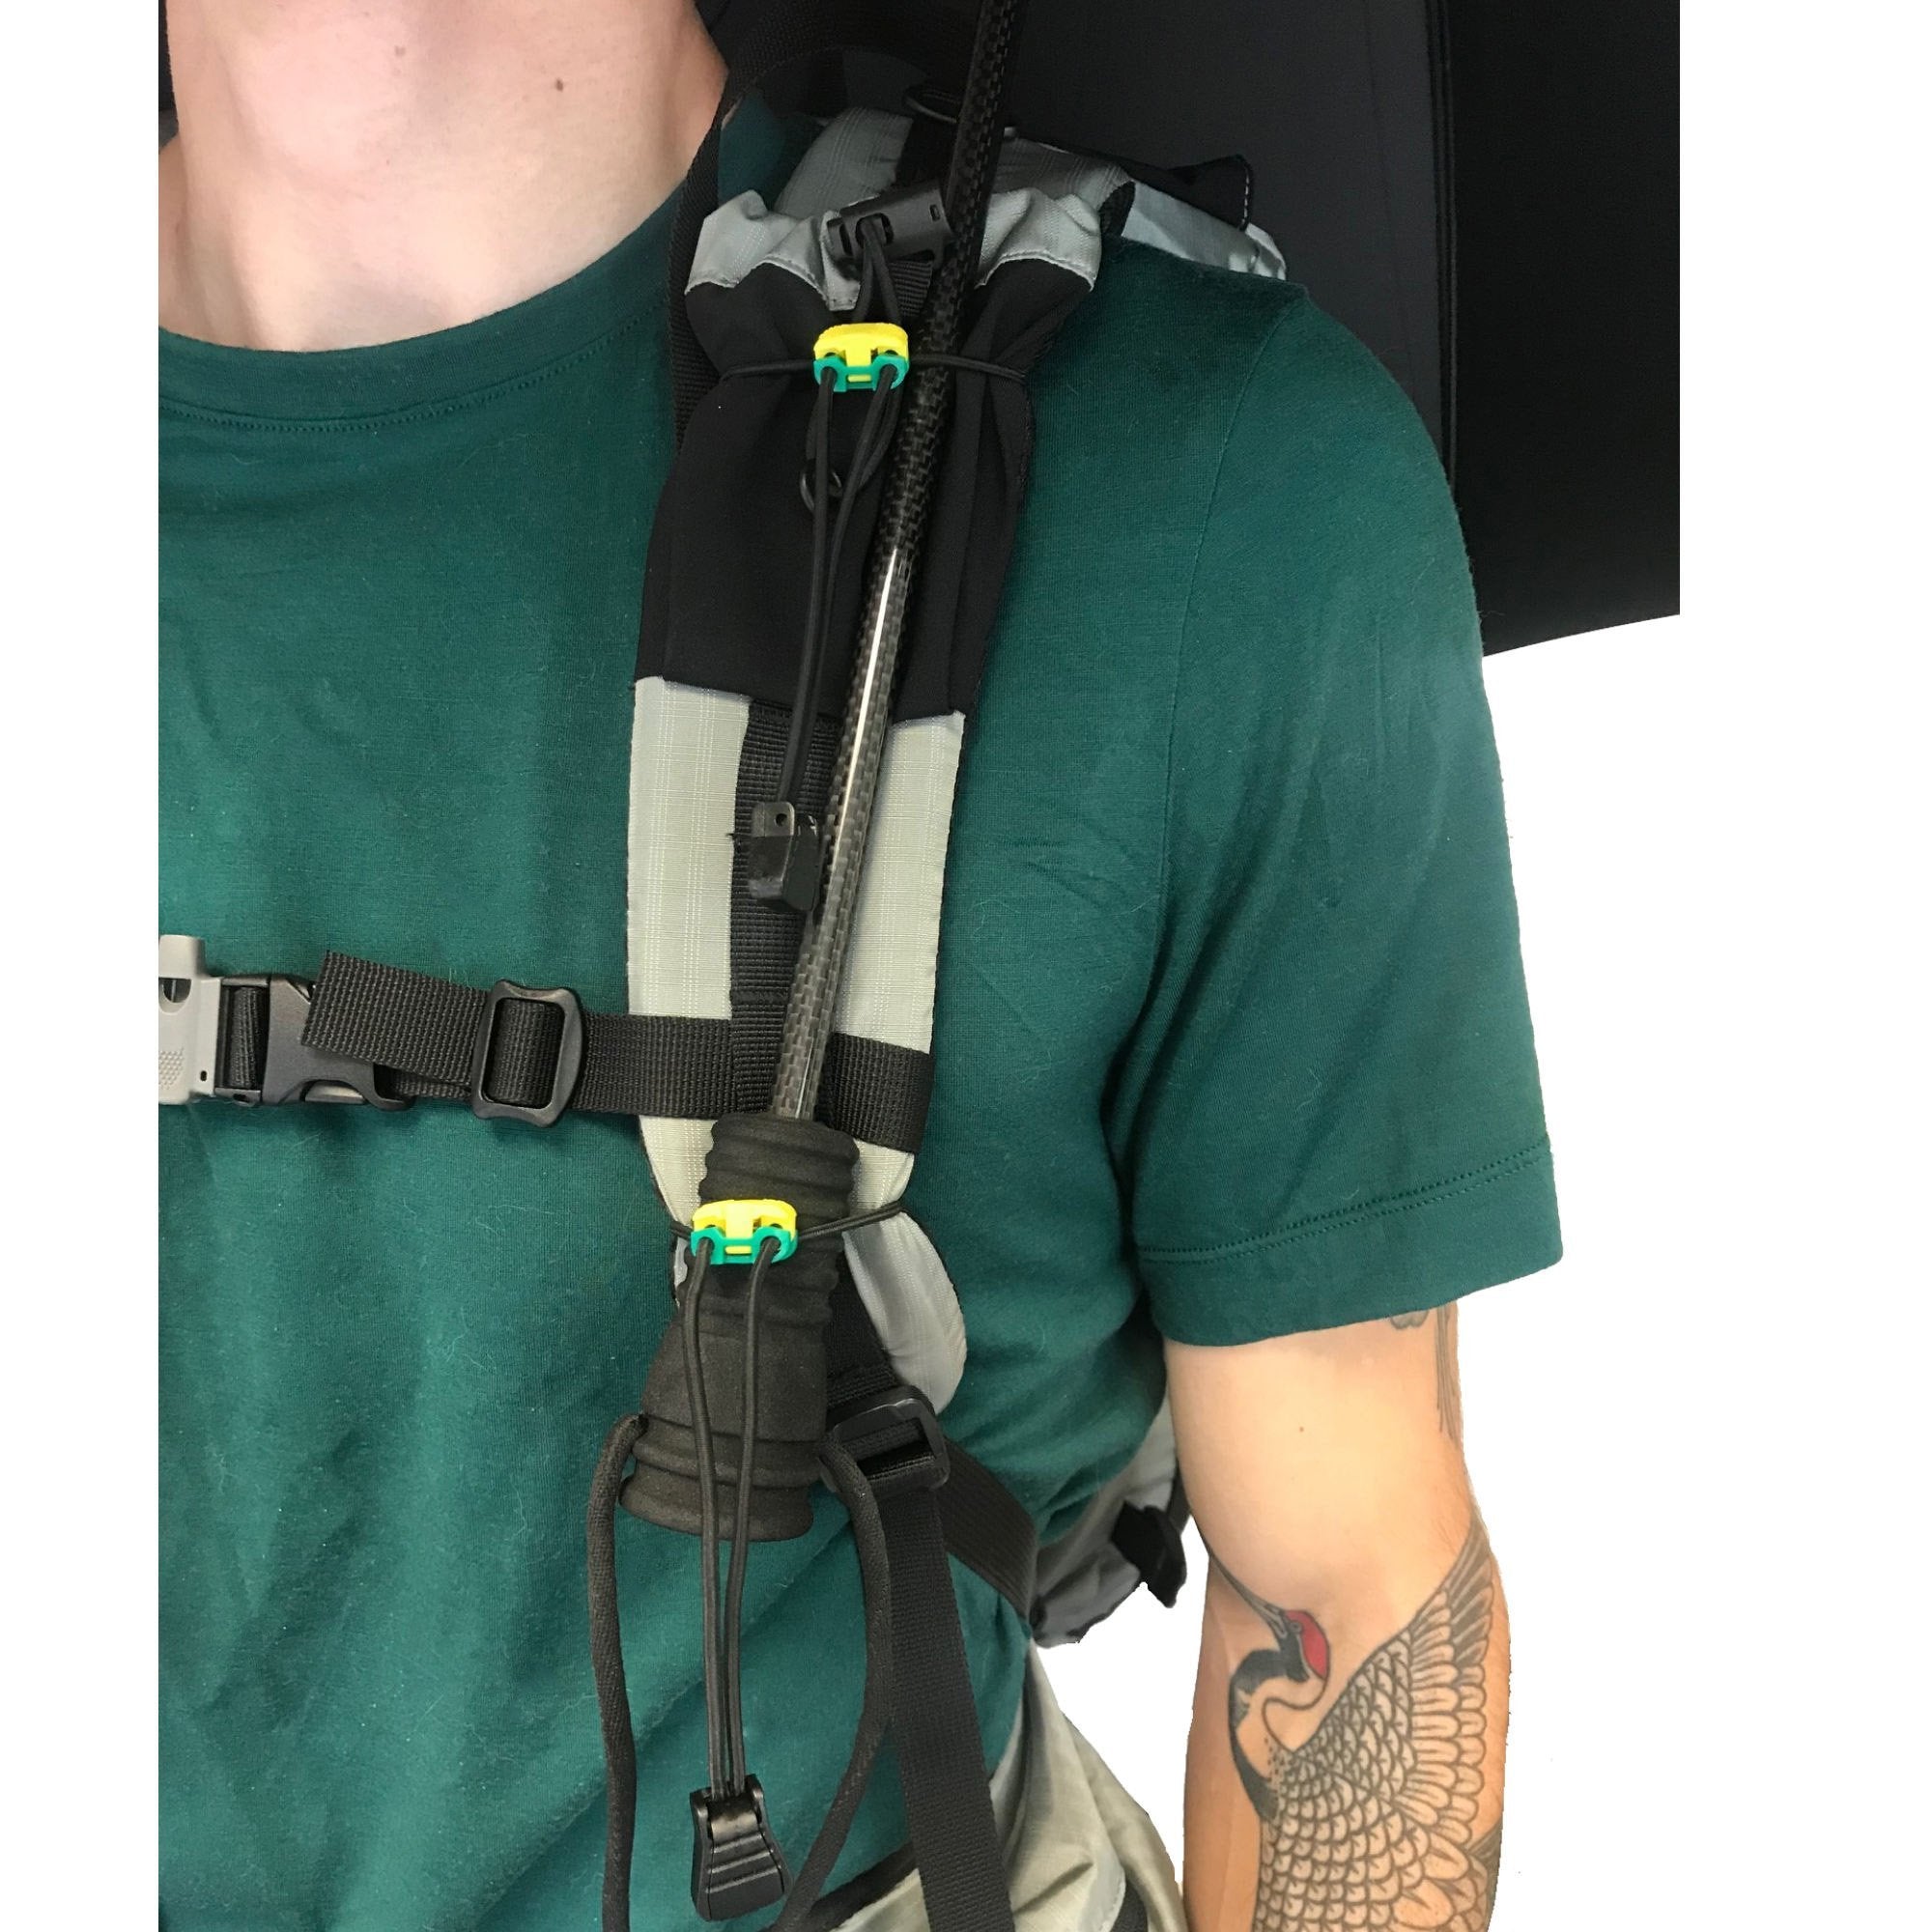 I designed Hands-free Umbrella Mount for a backpack. : r/3Dprinting